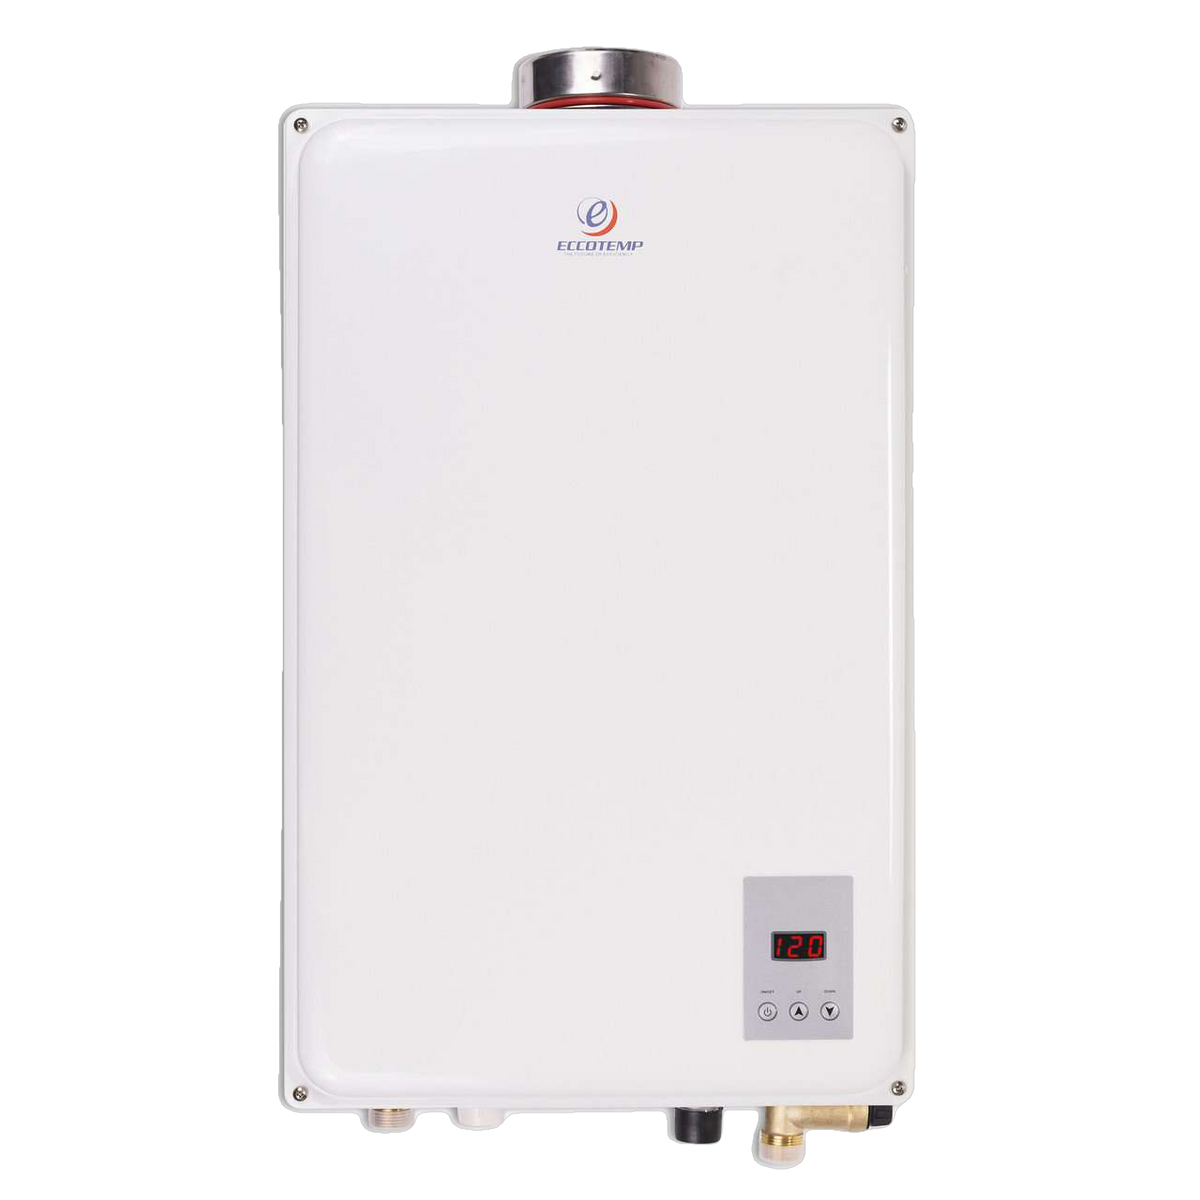 Eccotemp 45HI-LP 6.8 GPM Propane Tankless Water Heater Manufacturer RFB